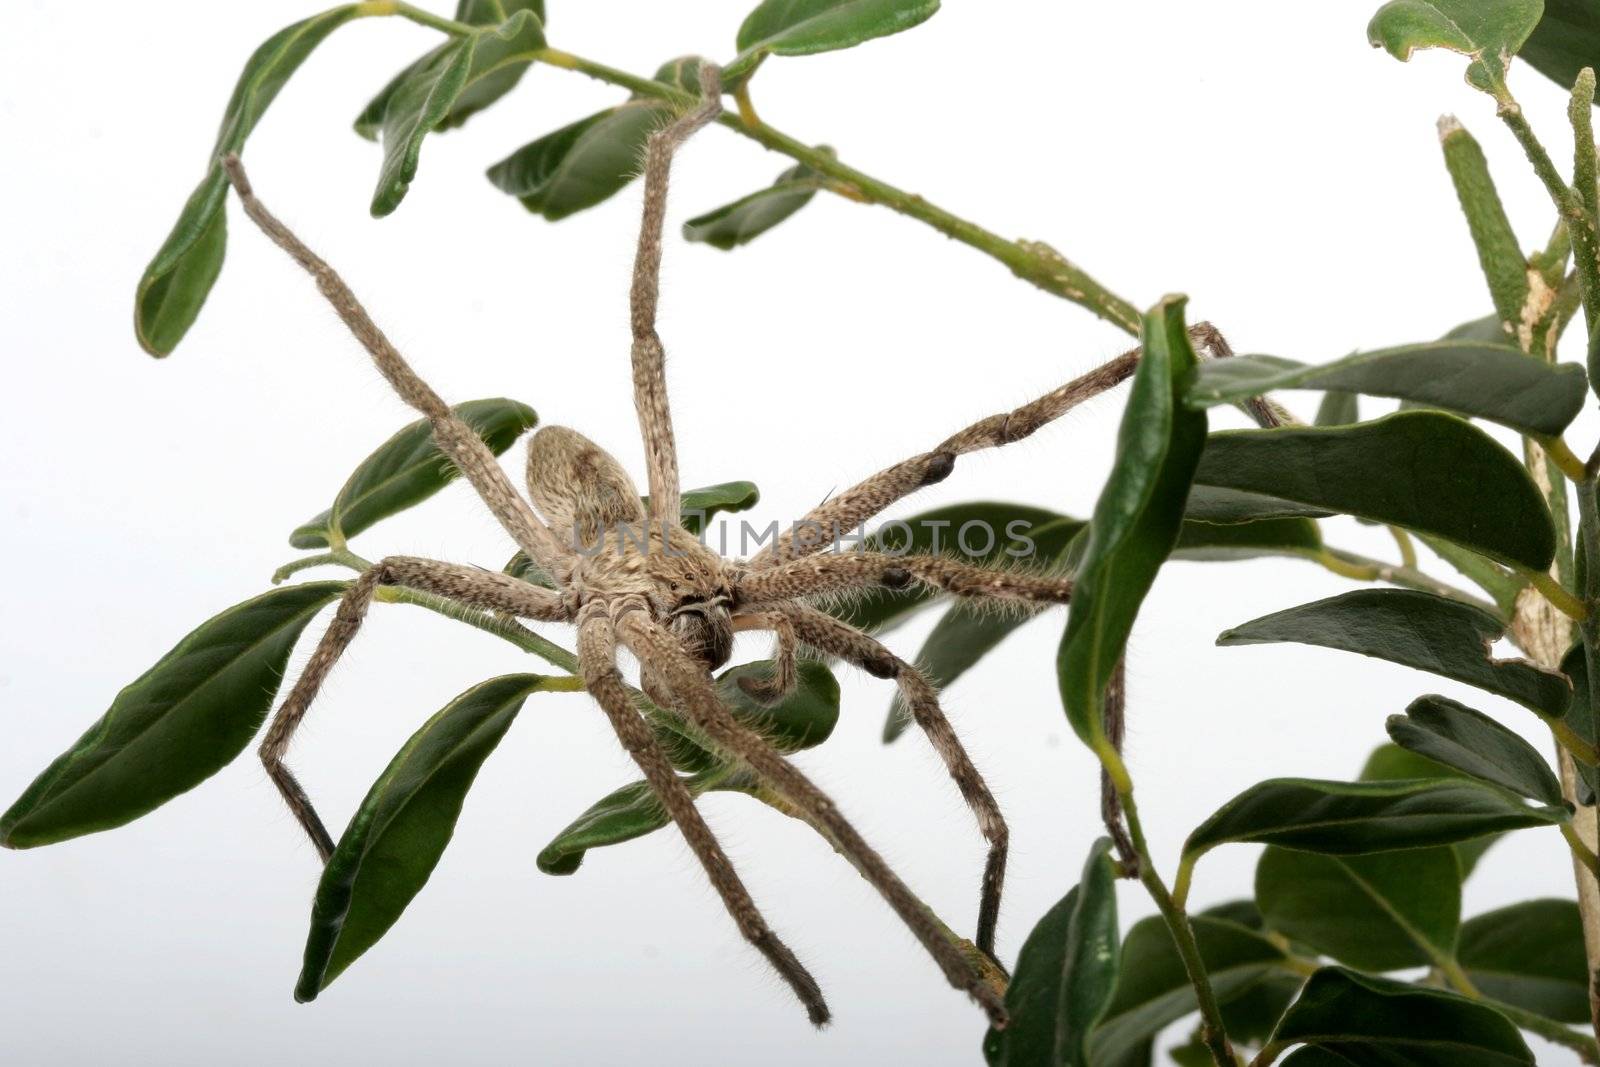 Tarantula Spider in Tree by fouroaks